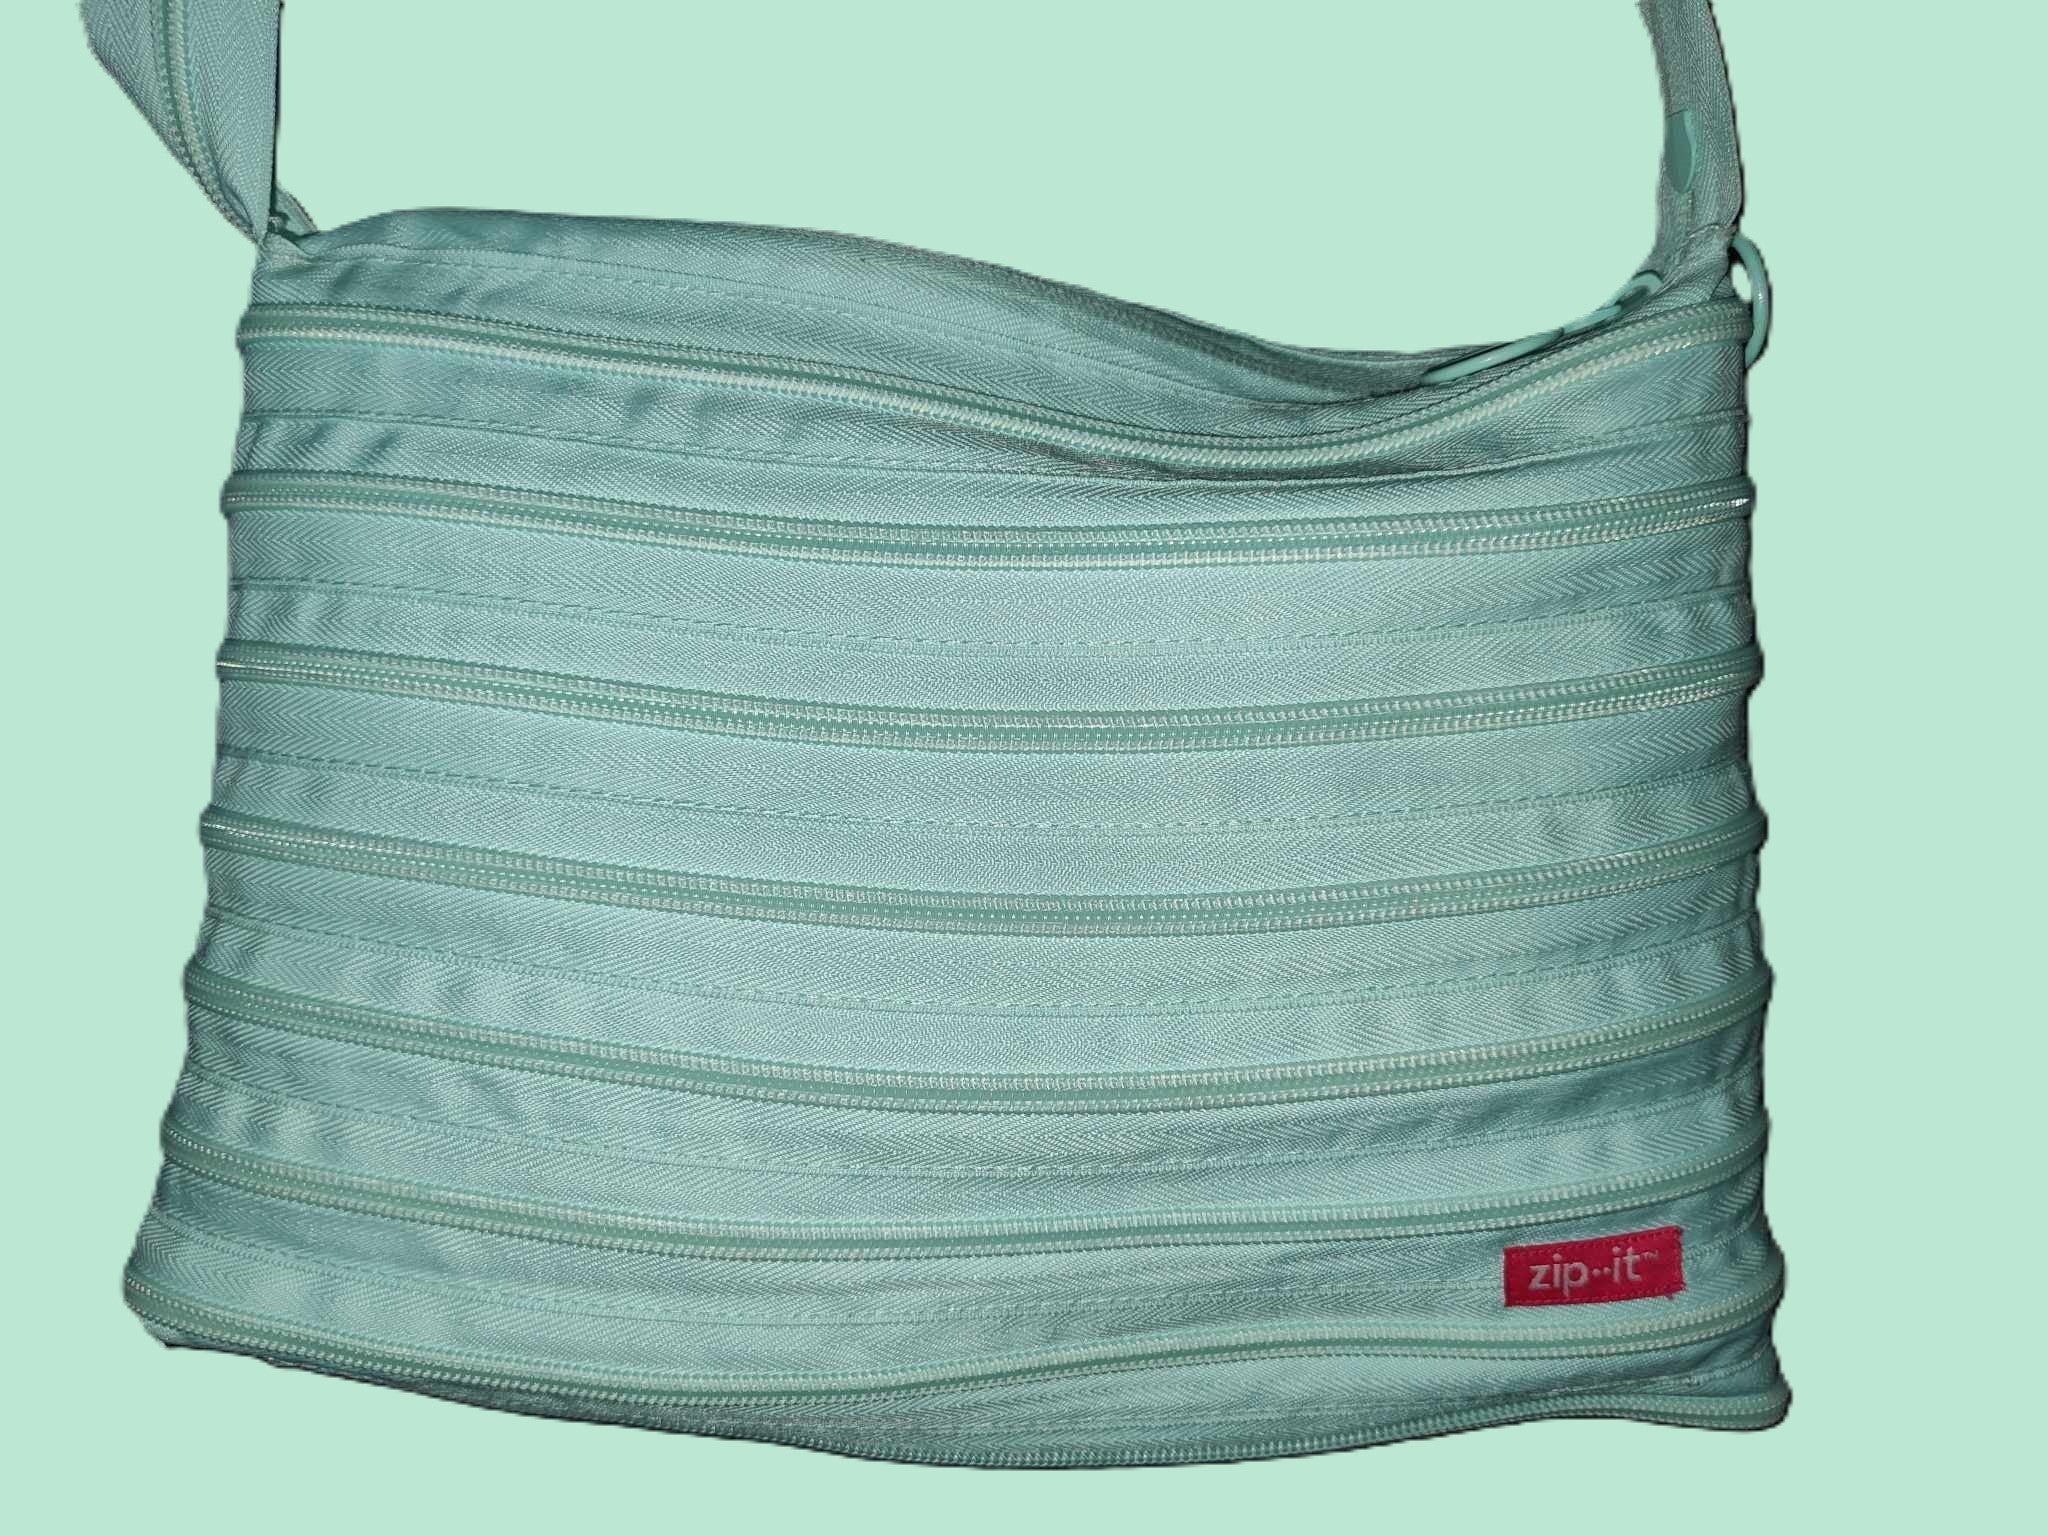 Women's Mint Green Zipit Handbag - pre-owned